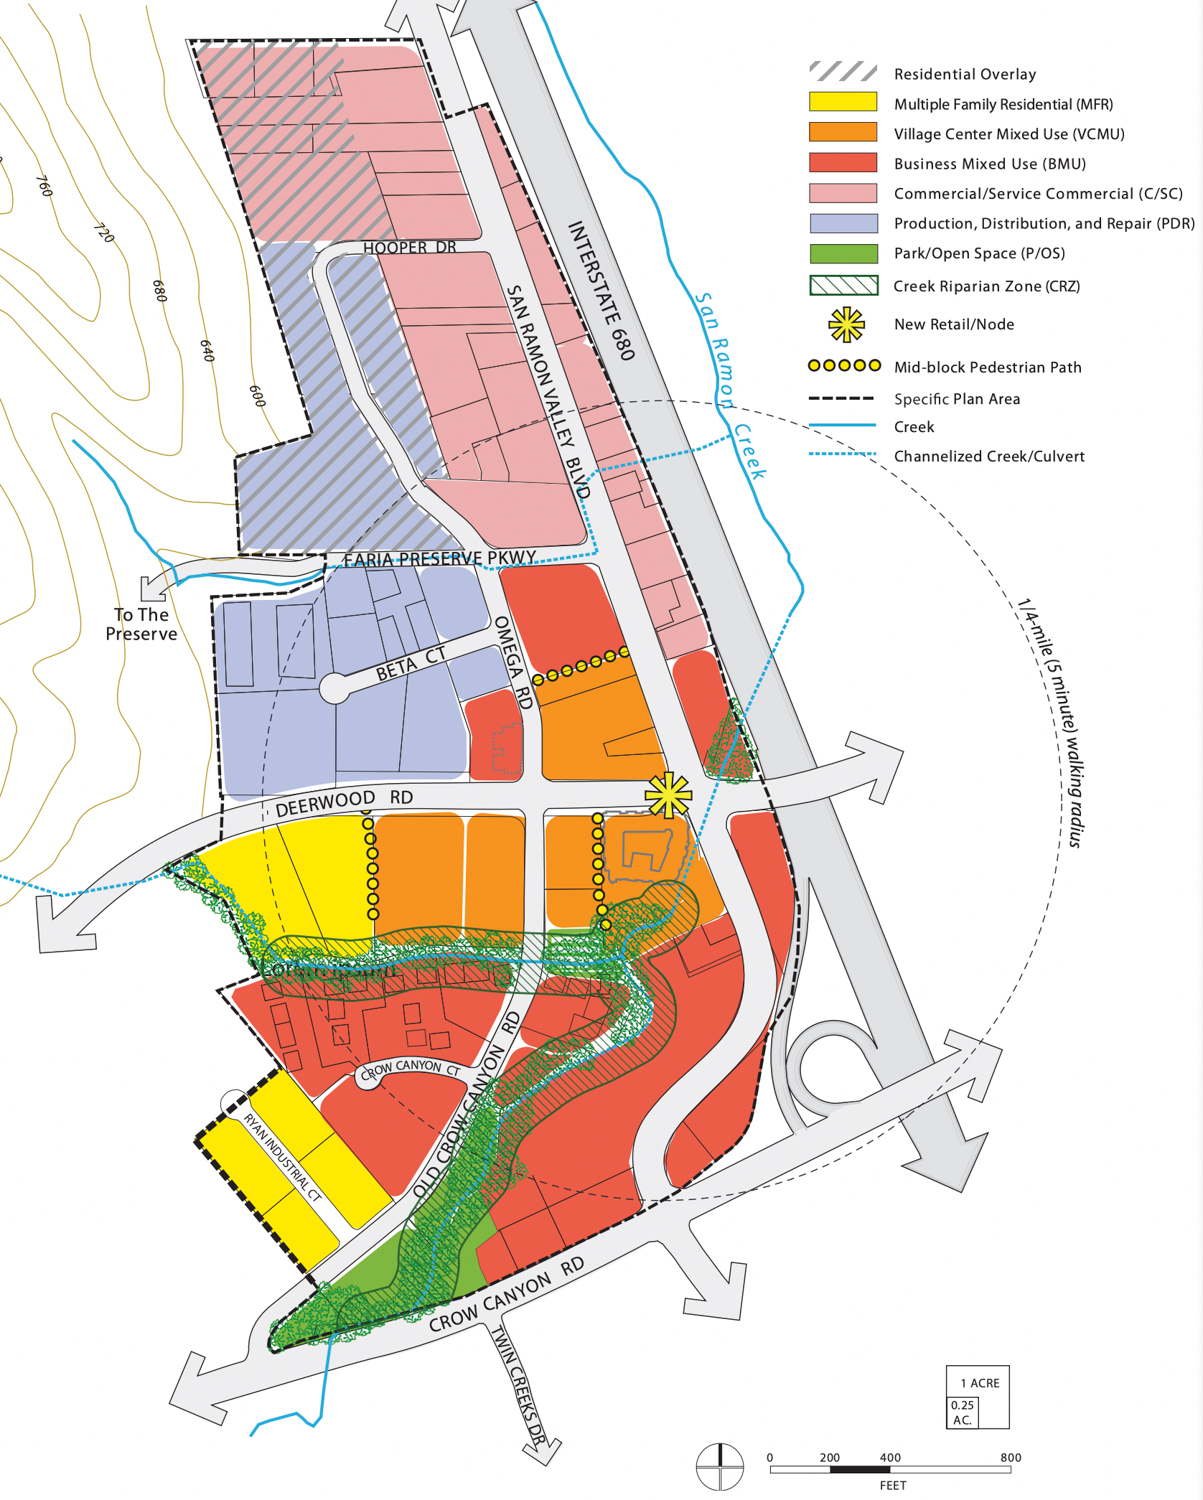 San Ramon Village Specific Plan, image via the City of San Ramon